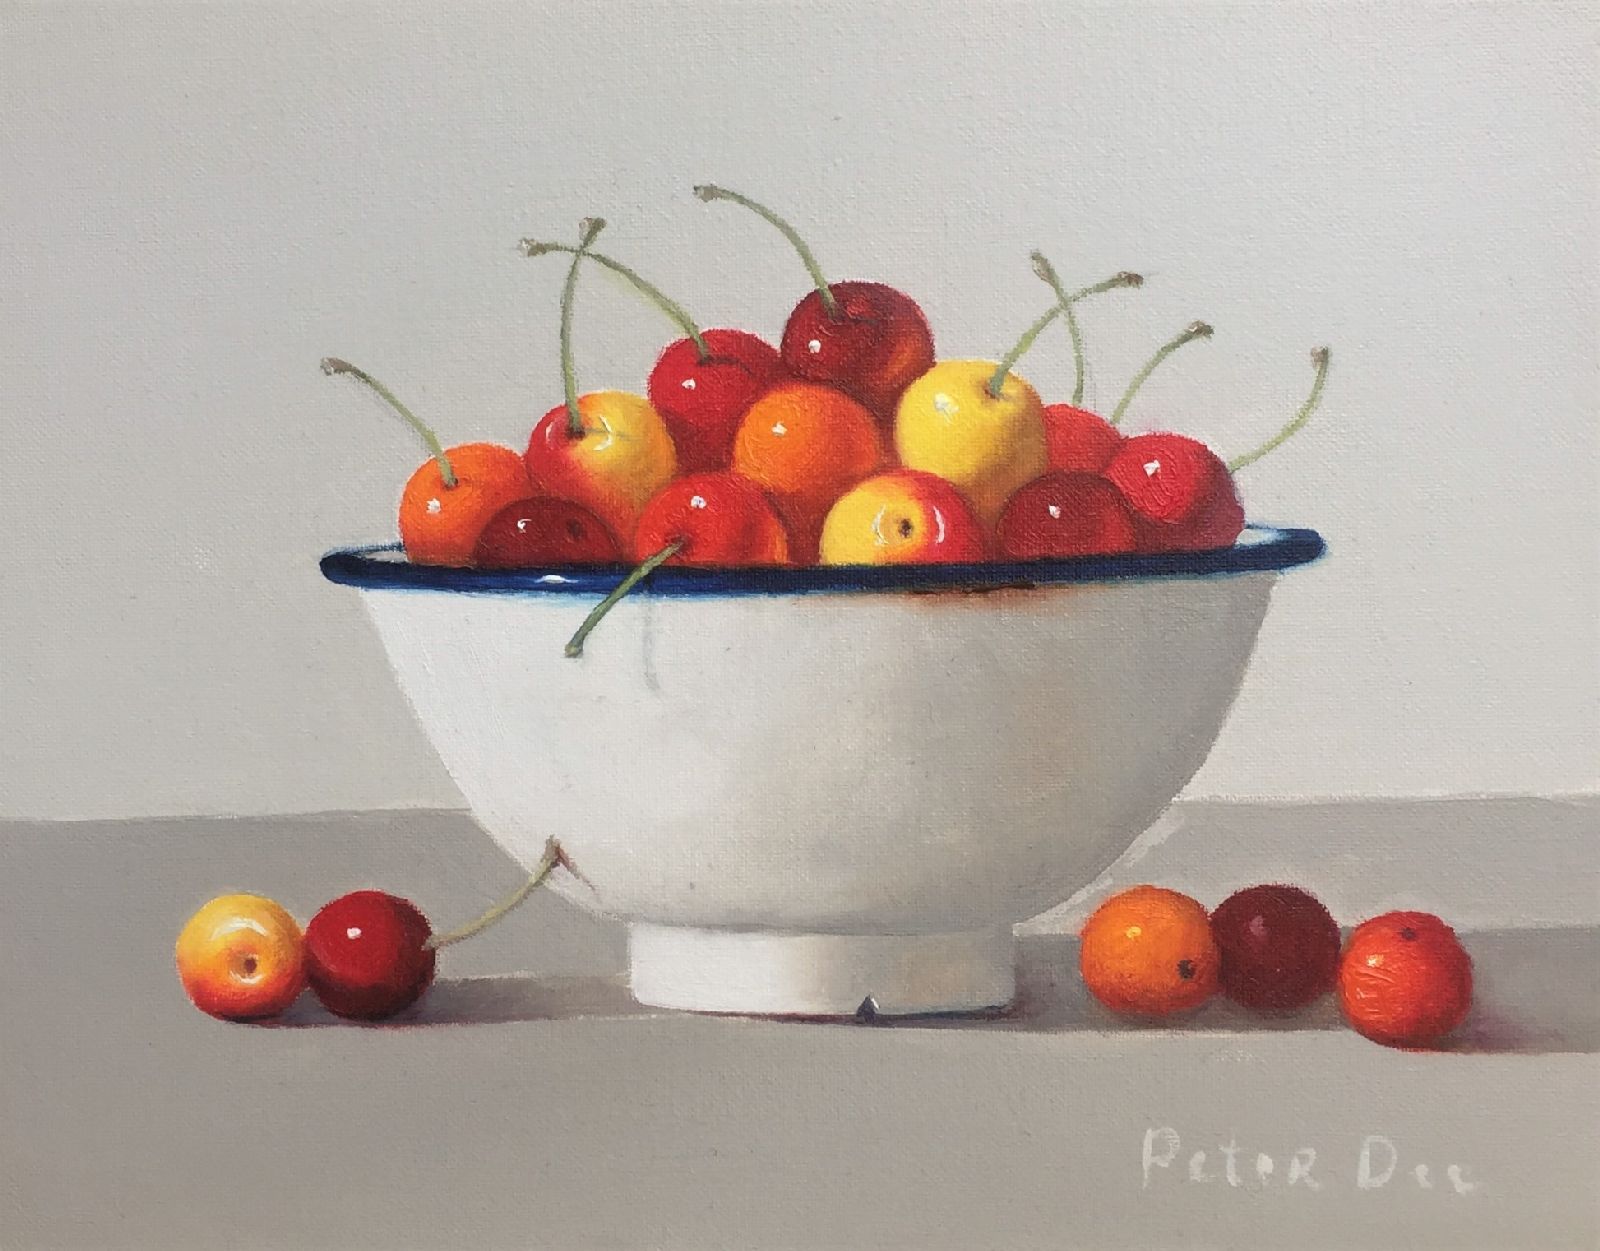 Peter Dee - Bowl Cherries Still Life